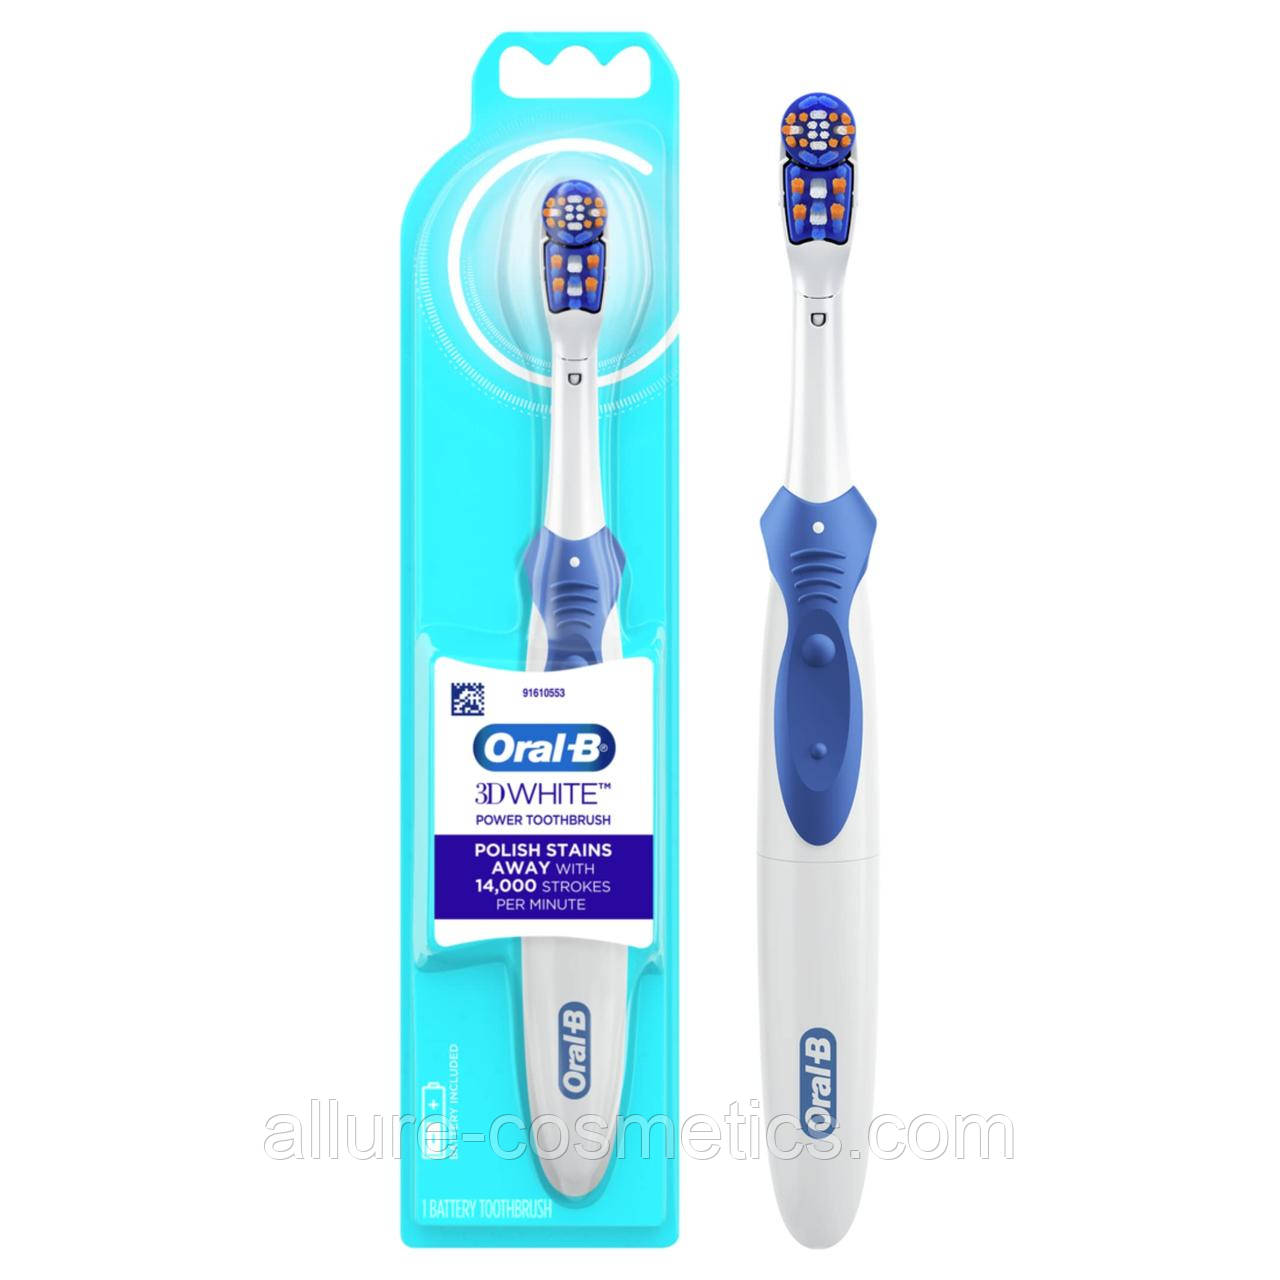 Електрична зубна щітка зі змінною насадкою Oral-B 3D White Battery Power Electric Toothbrush